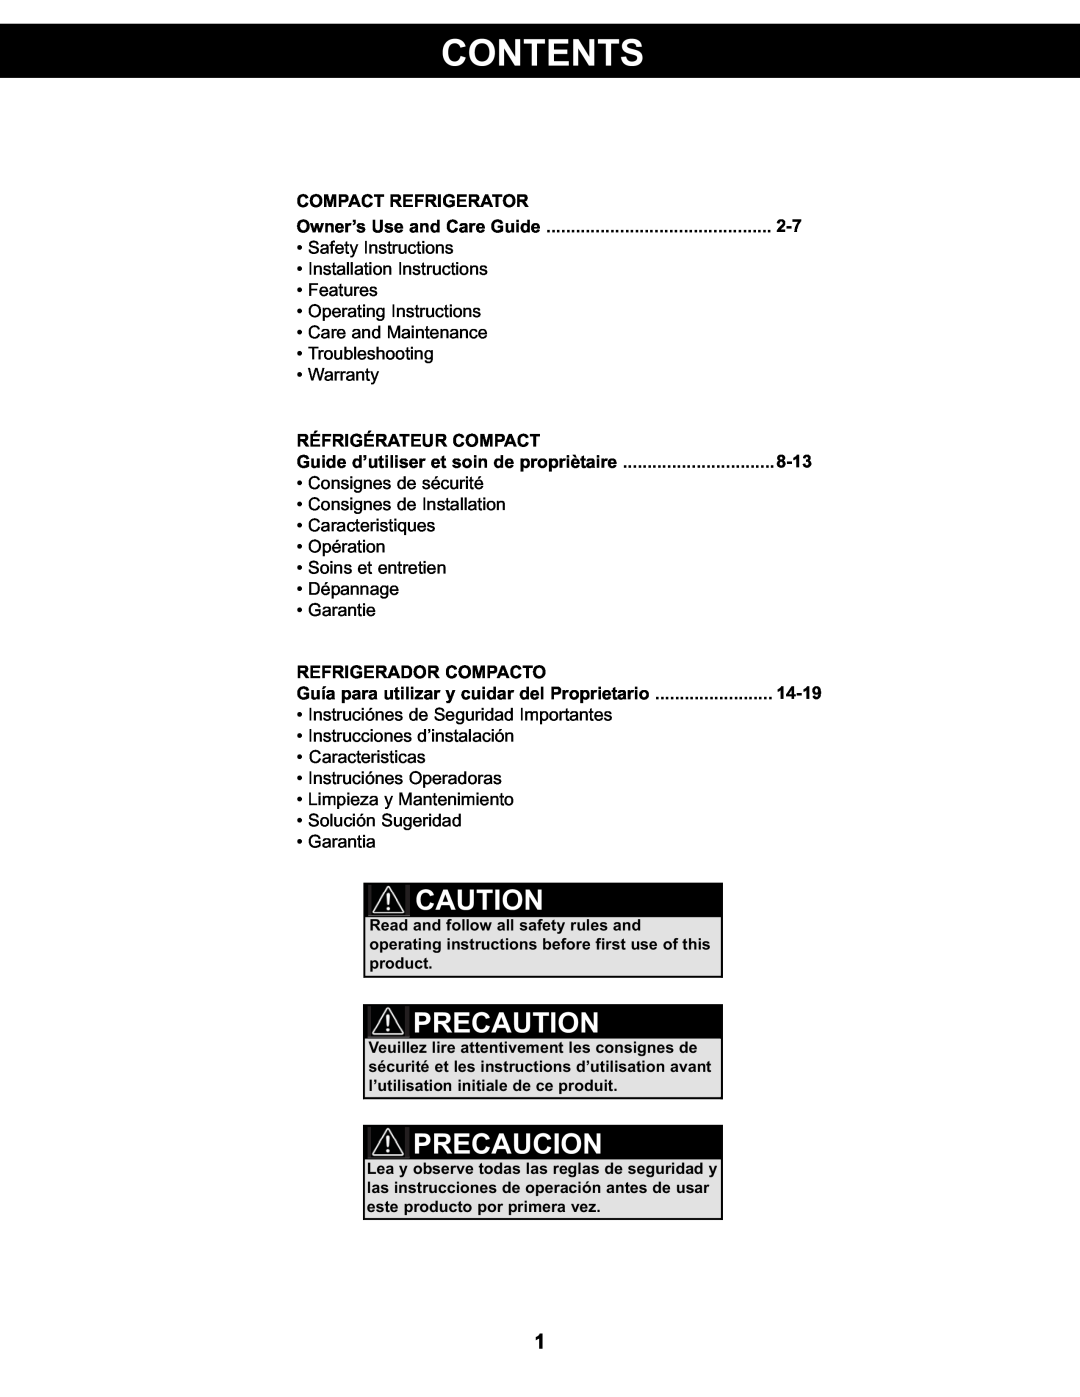 Sunbeam SBCR91BSL manual Contents, Precaution, Precaucion, Compact Refrigerator, Réfrigérateur Compact, 8-13, 14-19 